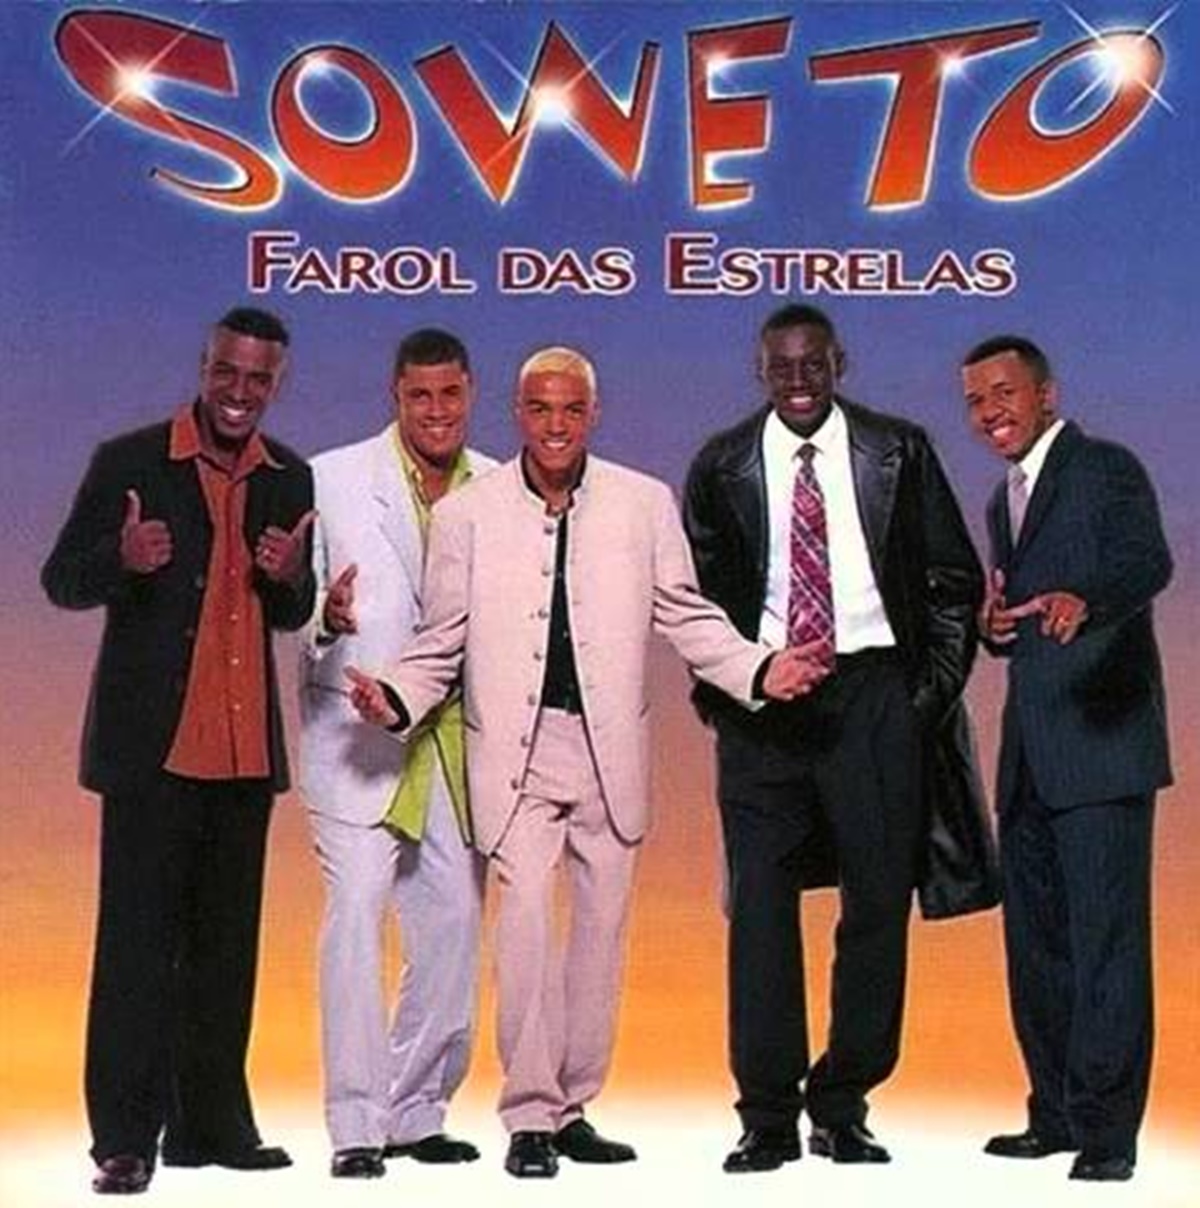 Soweto - banda Belo passado